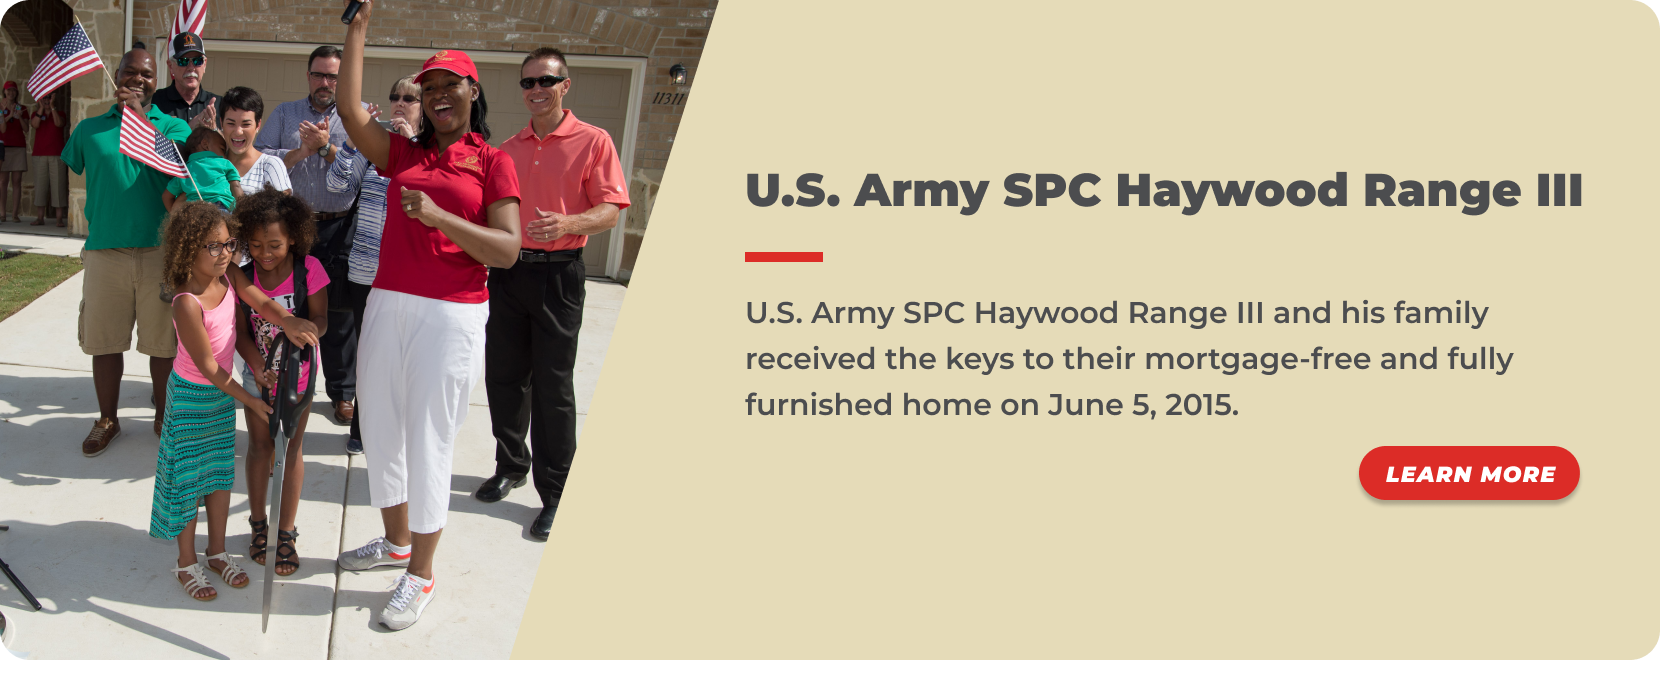 8 -U.S. Army SPC Haywood Range III